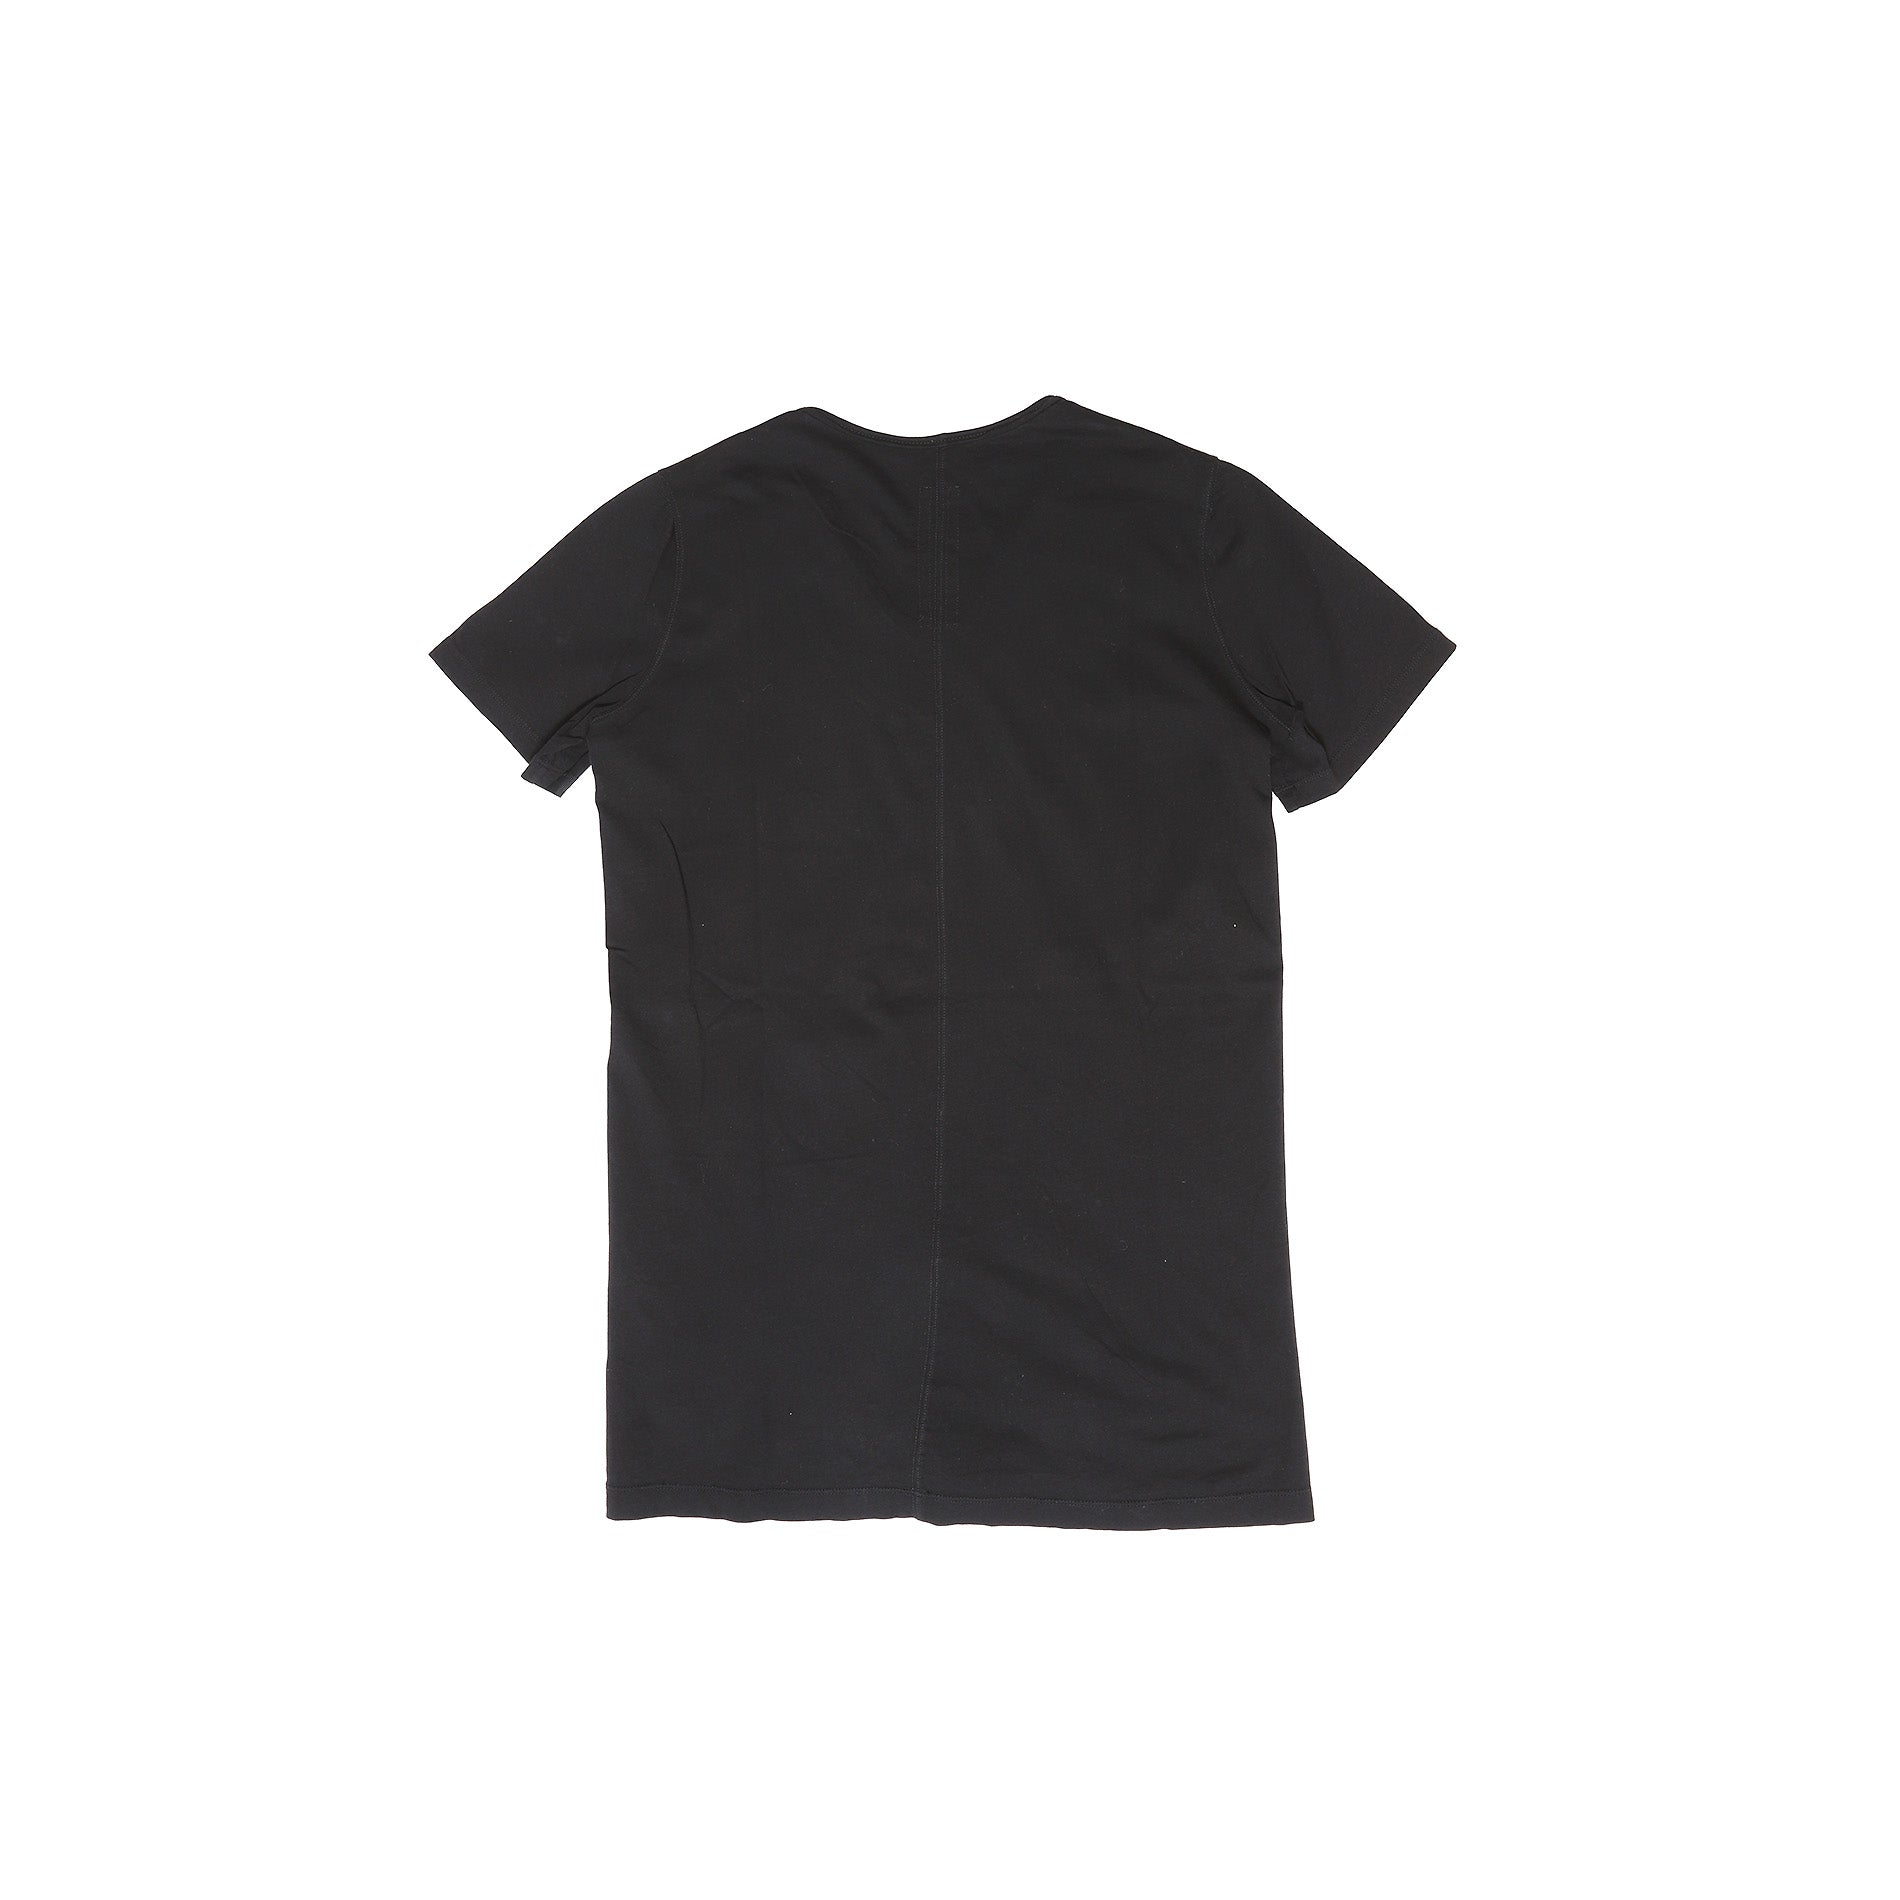 Rick Owens DRKSHDW SS17 Geometric Patch T-Shirt